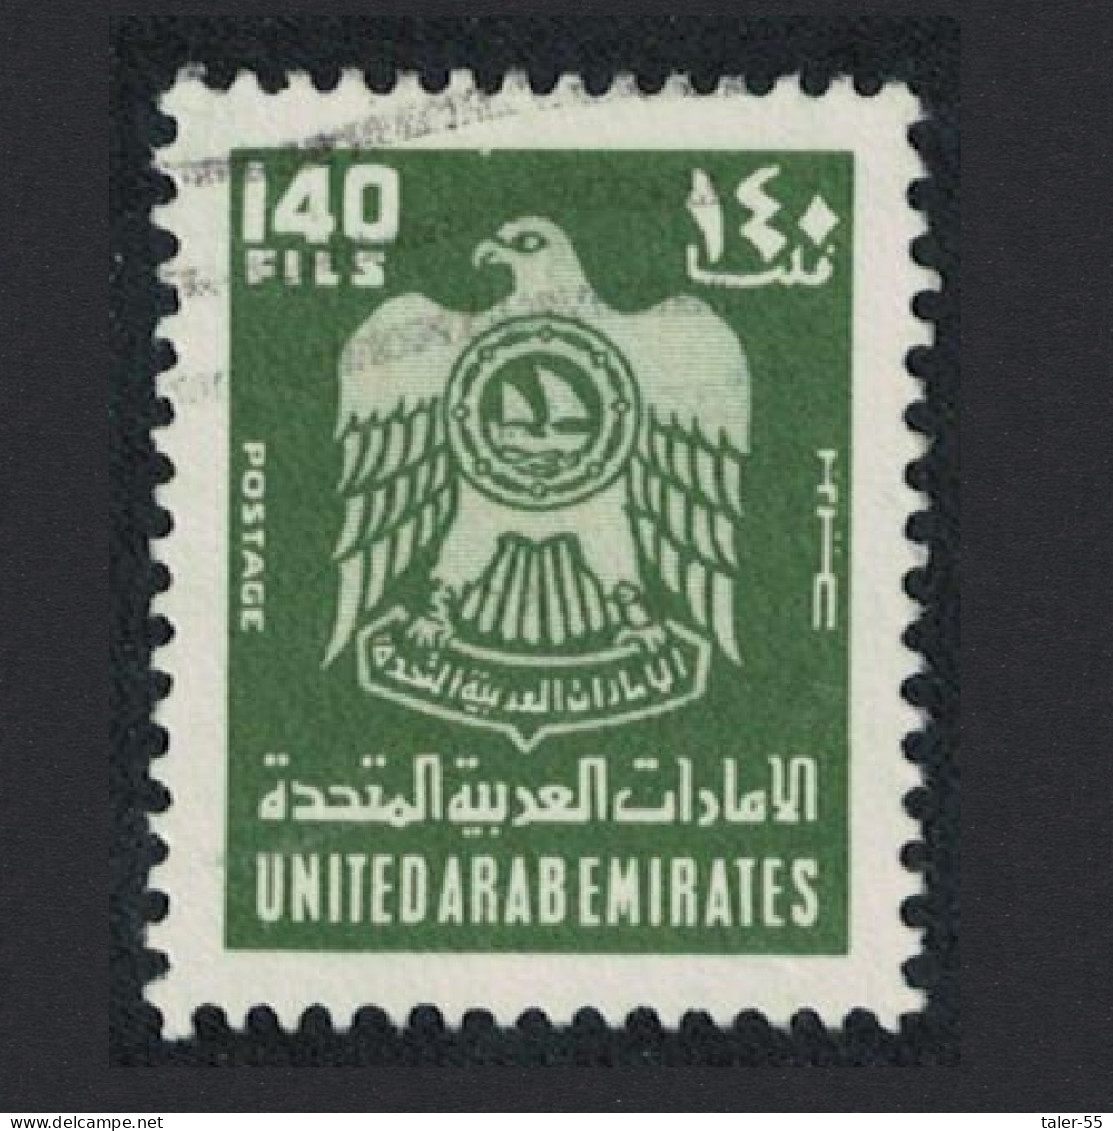 United Arab Emirates Crest Bird 140 Fils 1976 MNH SG#66 MI#66 - Ver. Arab. Emirate